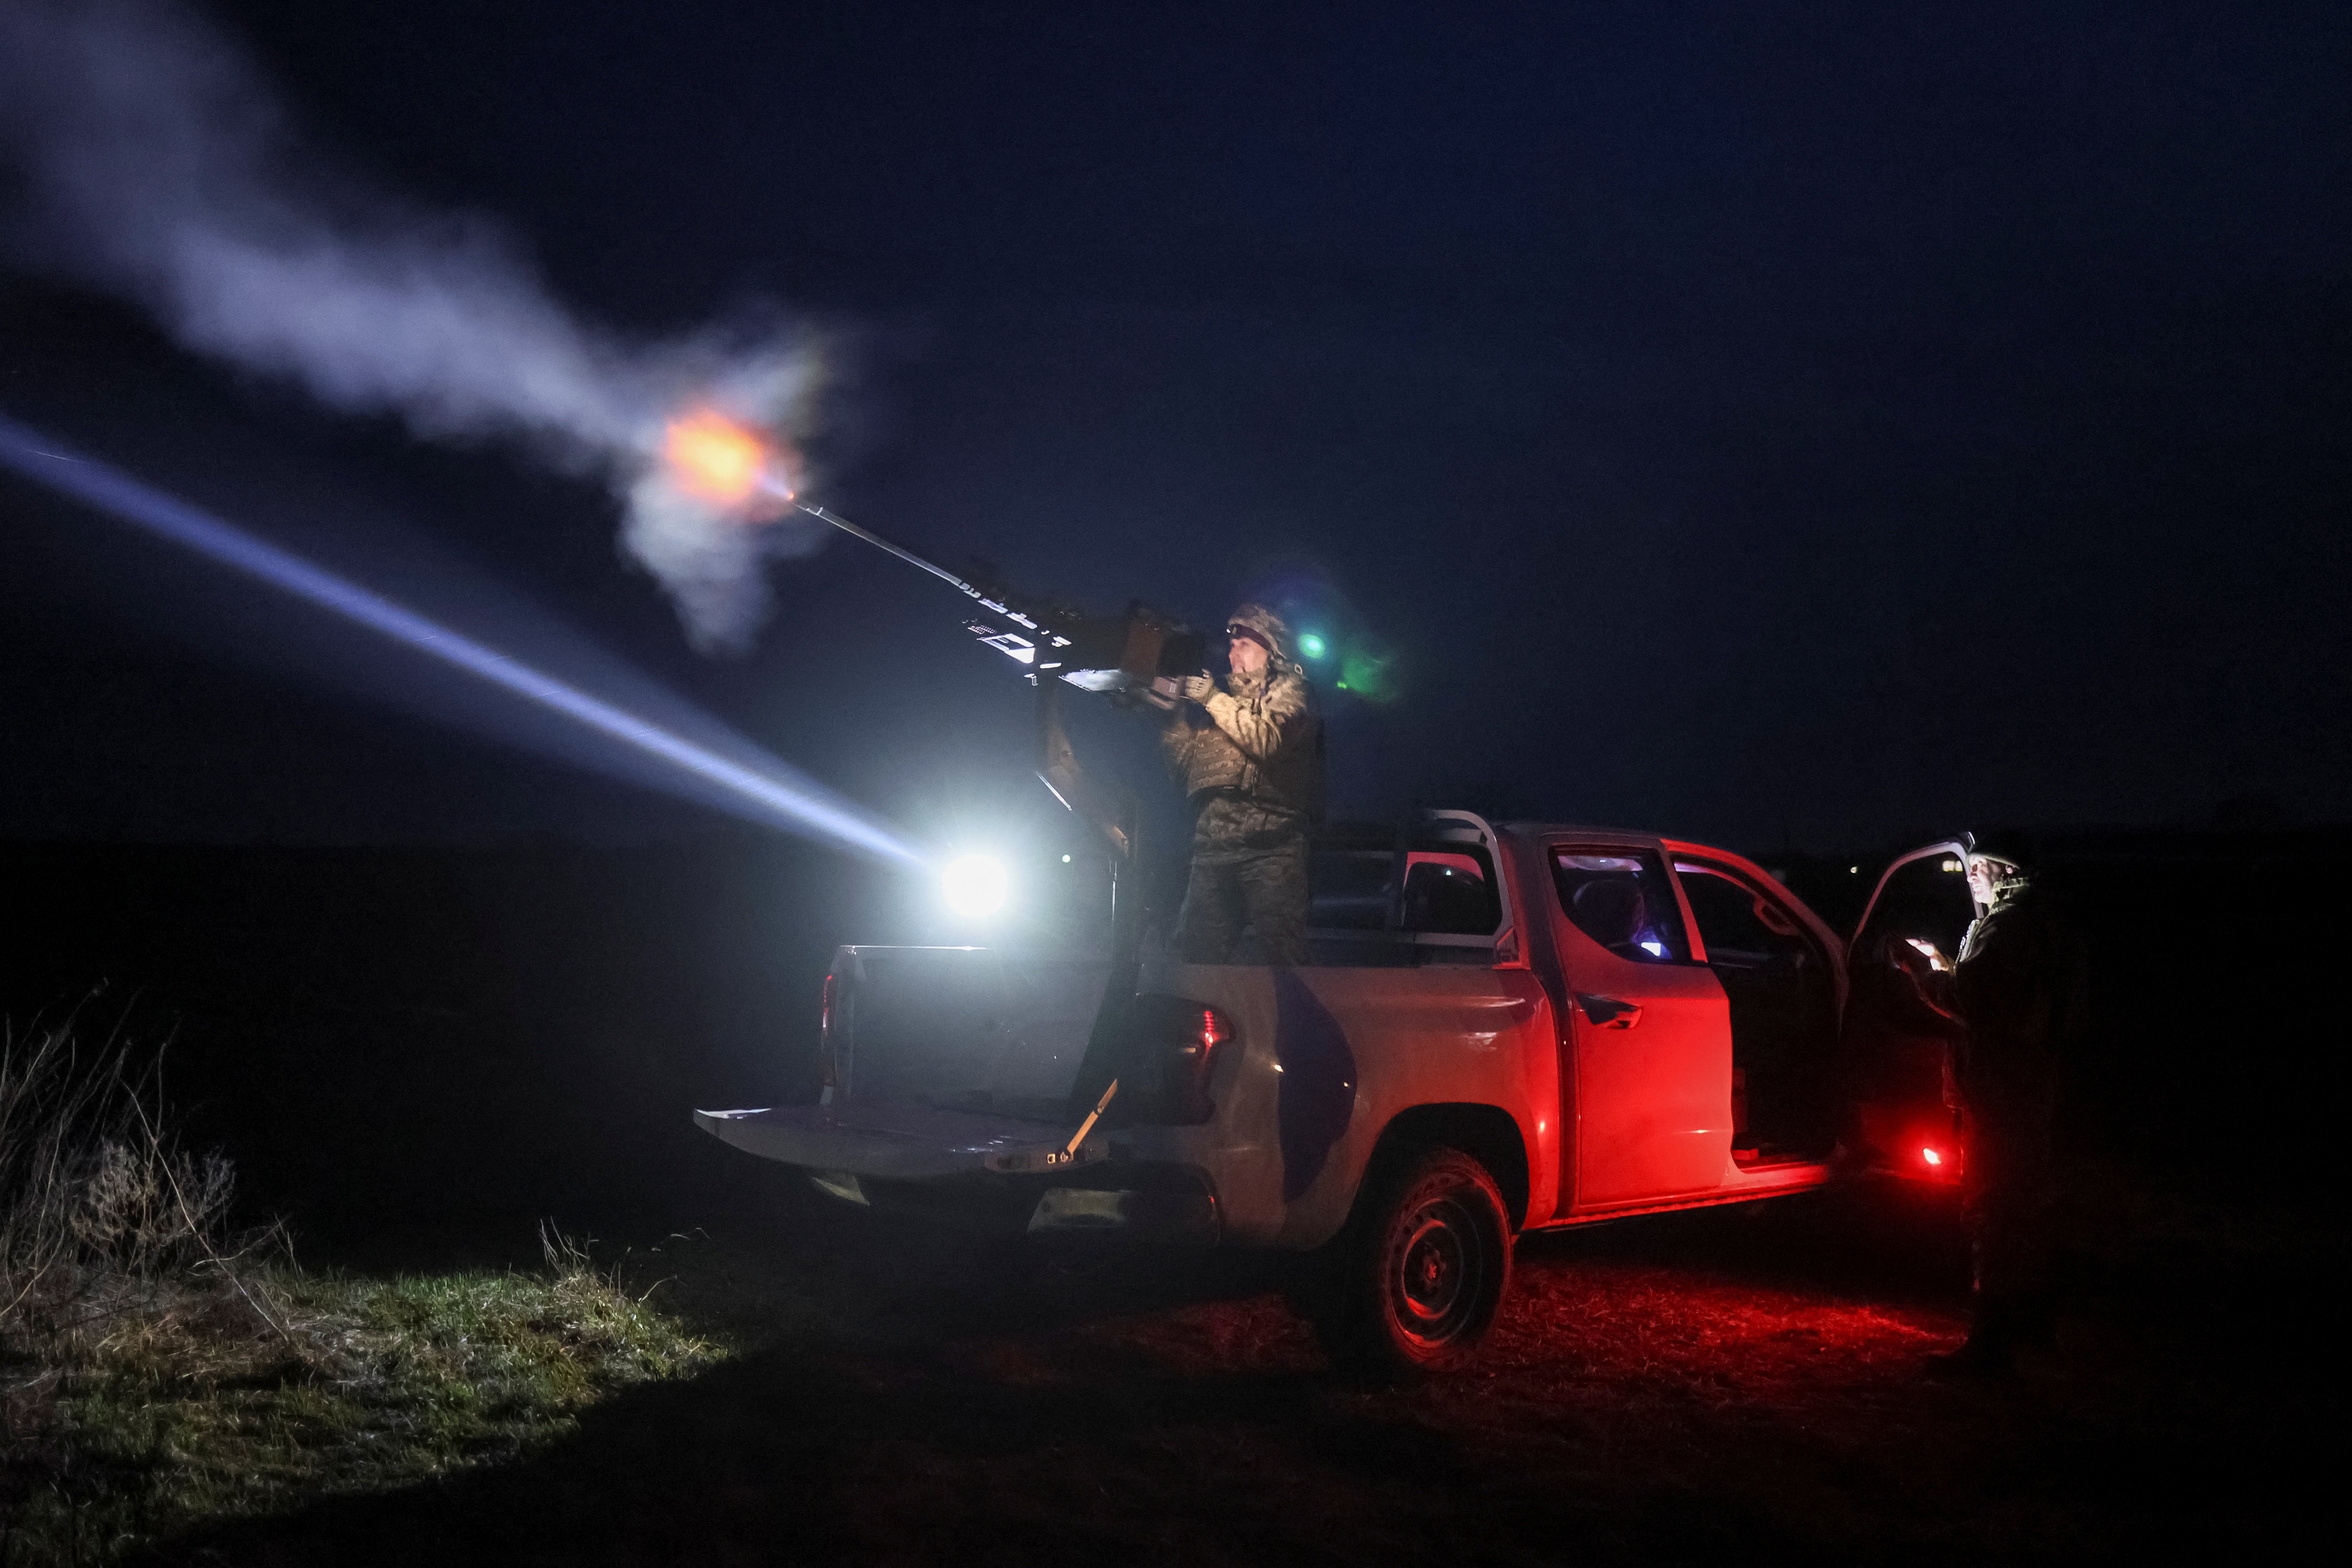 A Ukrainian serviceman from anti-drone mobile air defence unit fires a machine gun